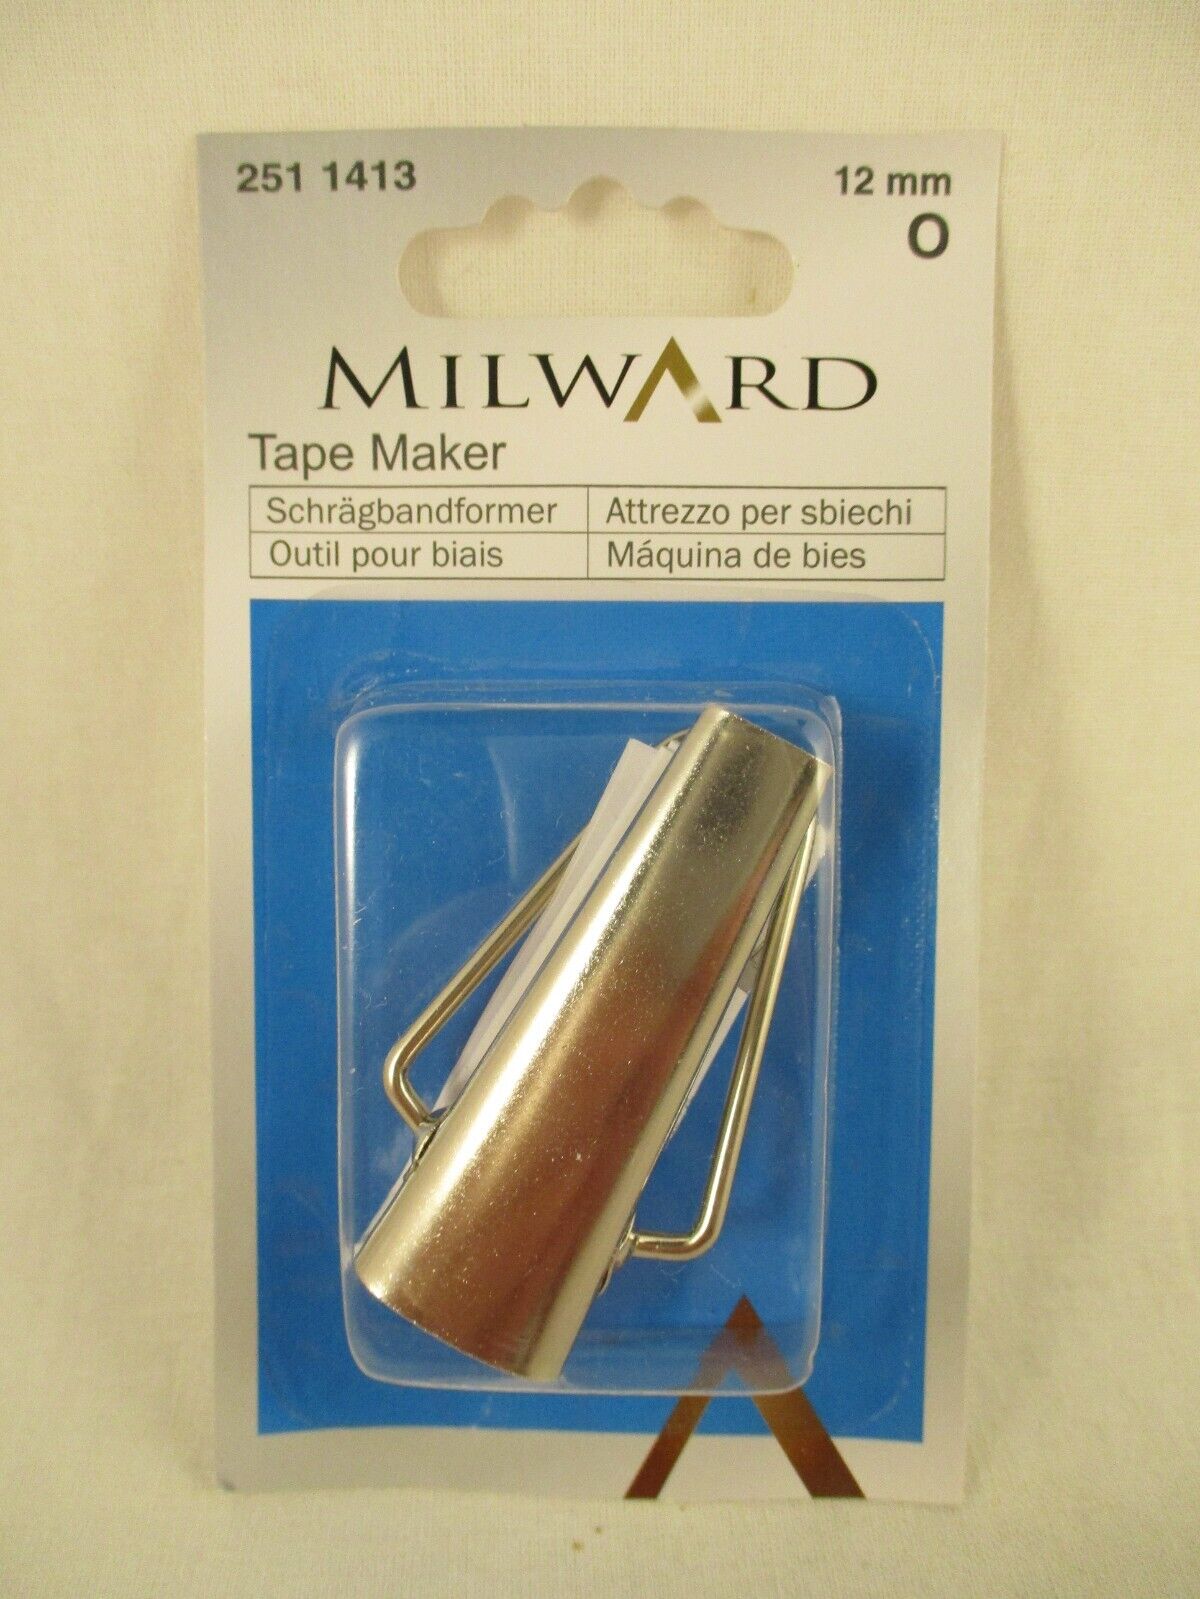 MILWARD Bias Tape Maker 12mm